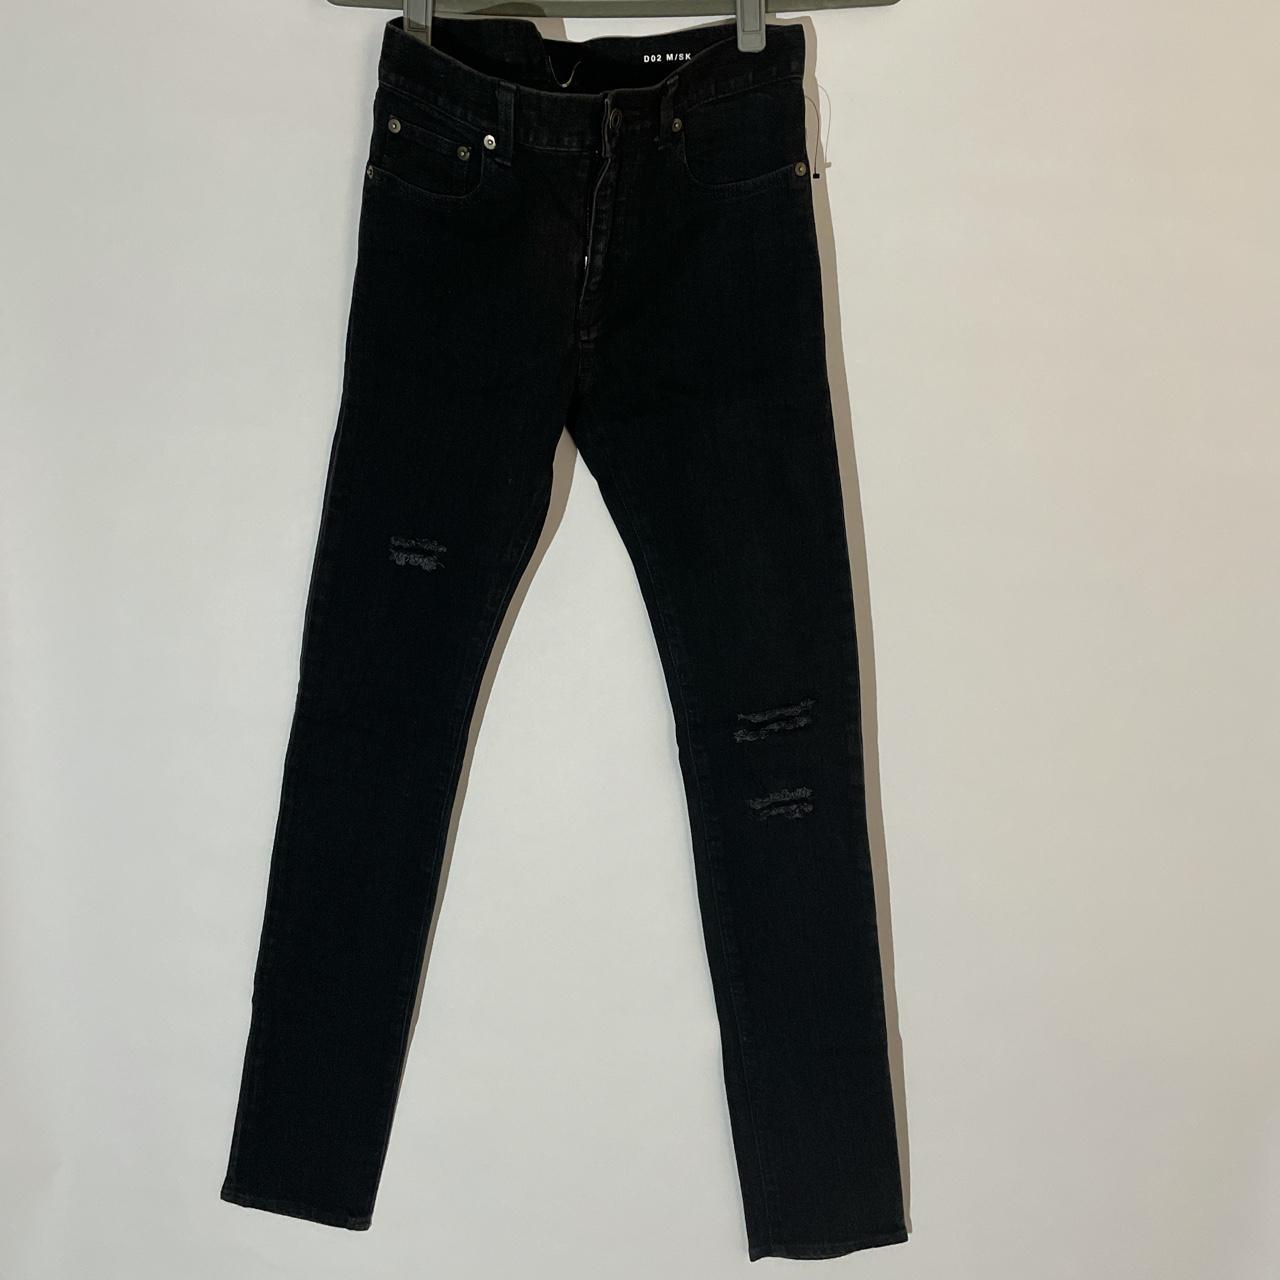 Saint Laurent straight leg skinny jeans. Black,... - Depop